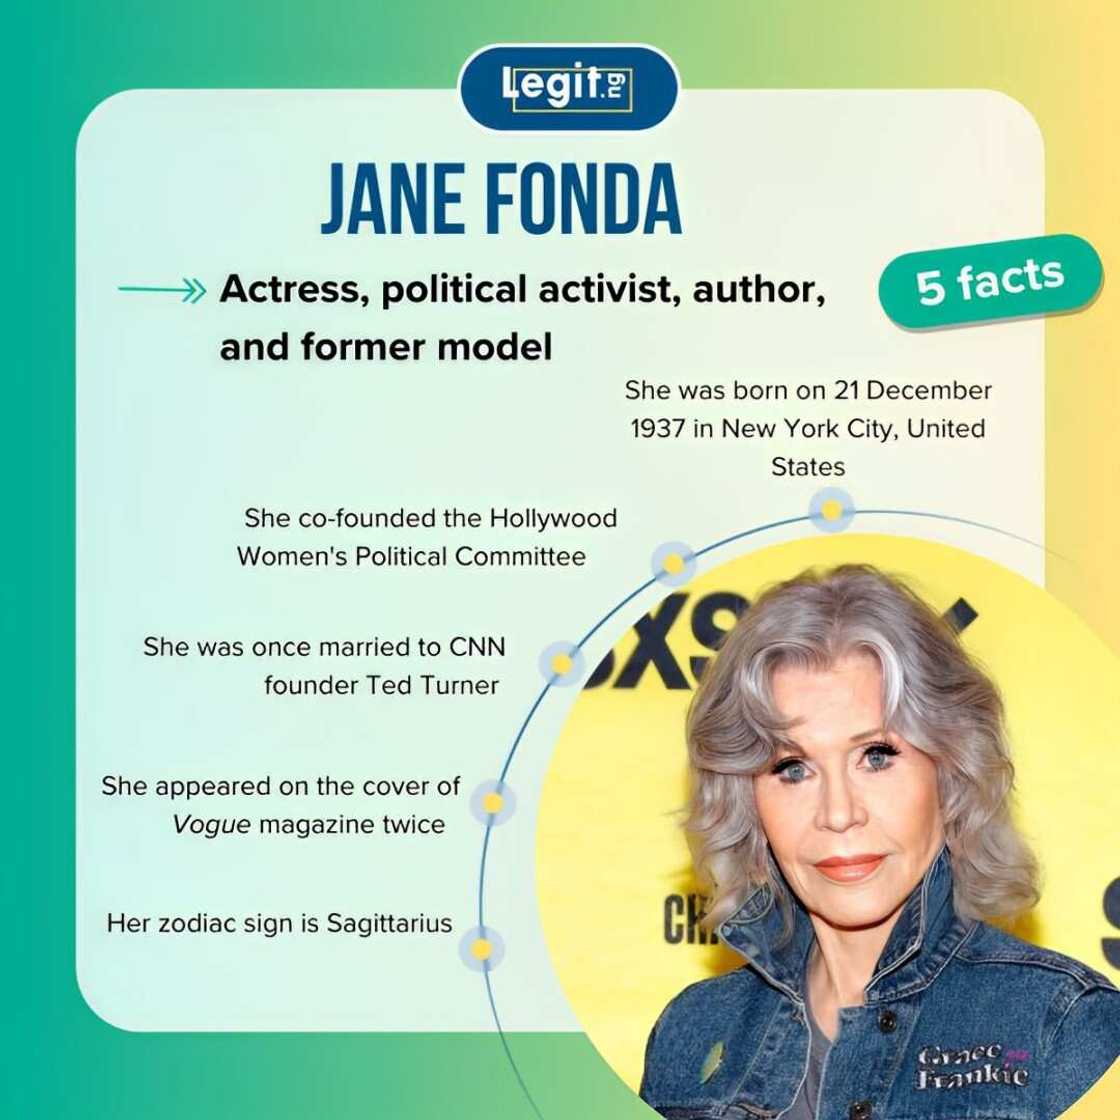 Five quick about Jane Fonda